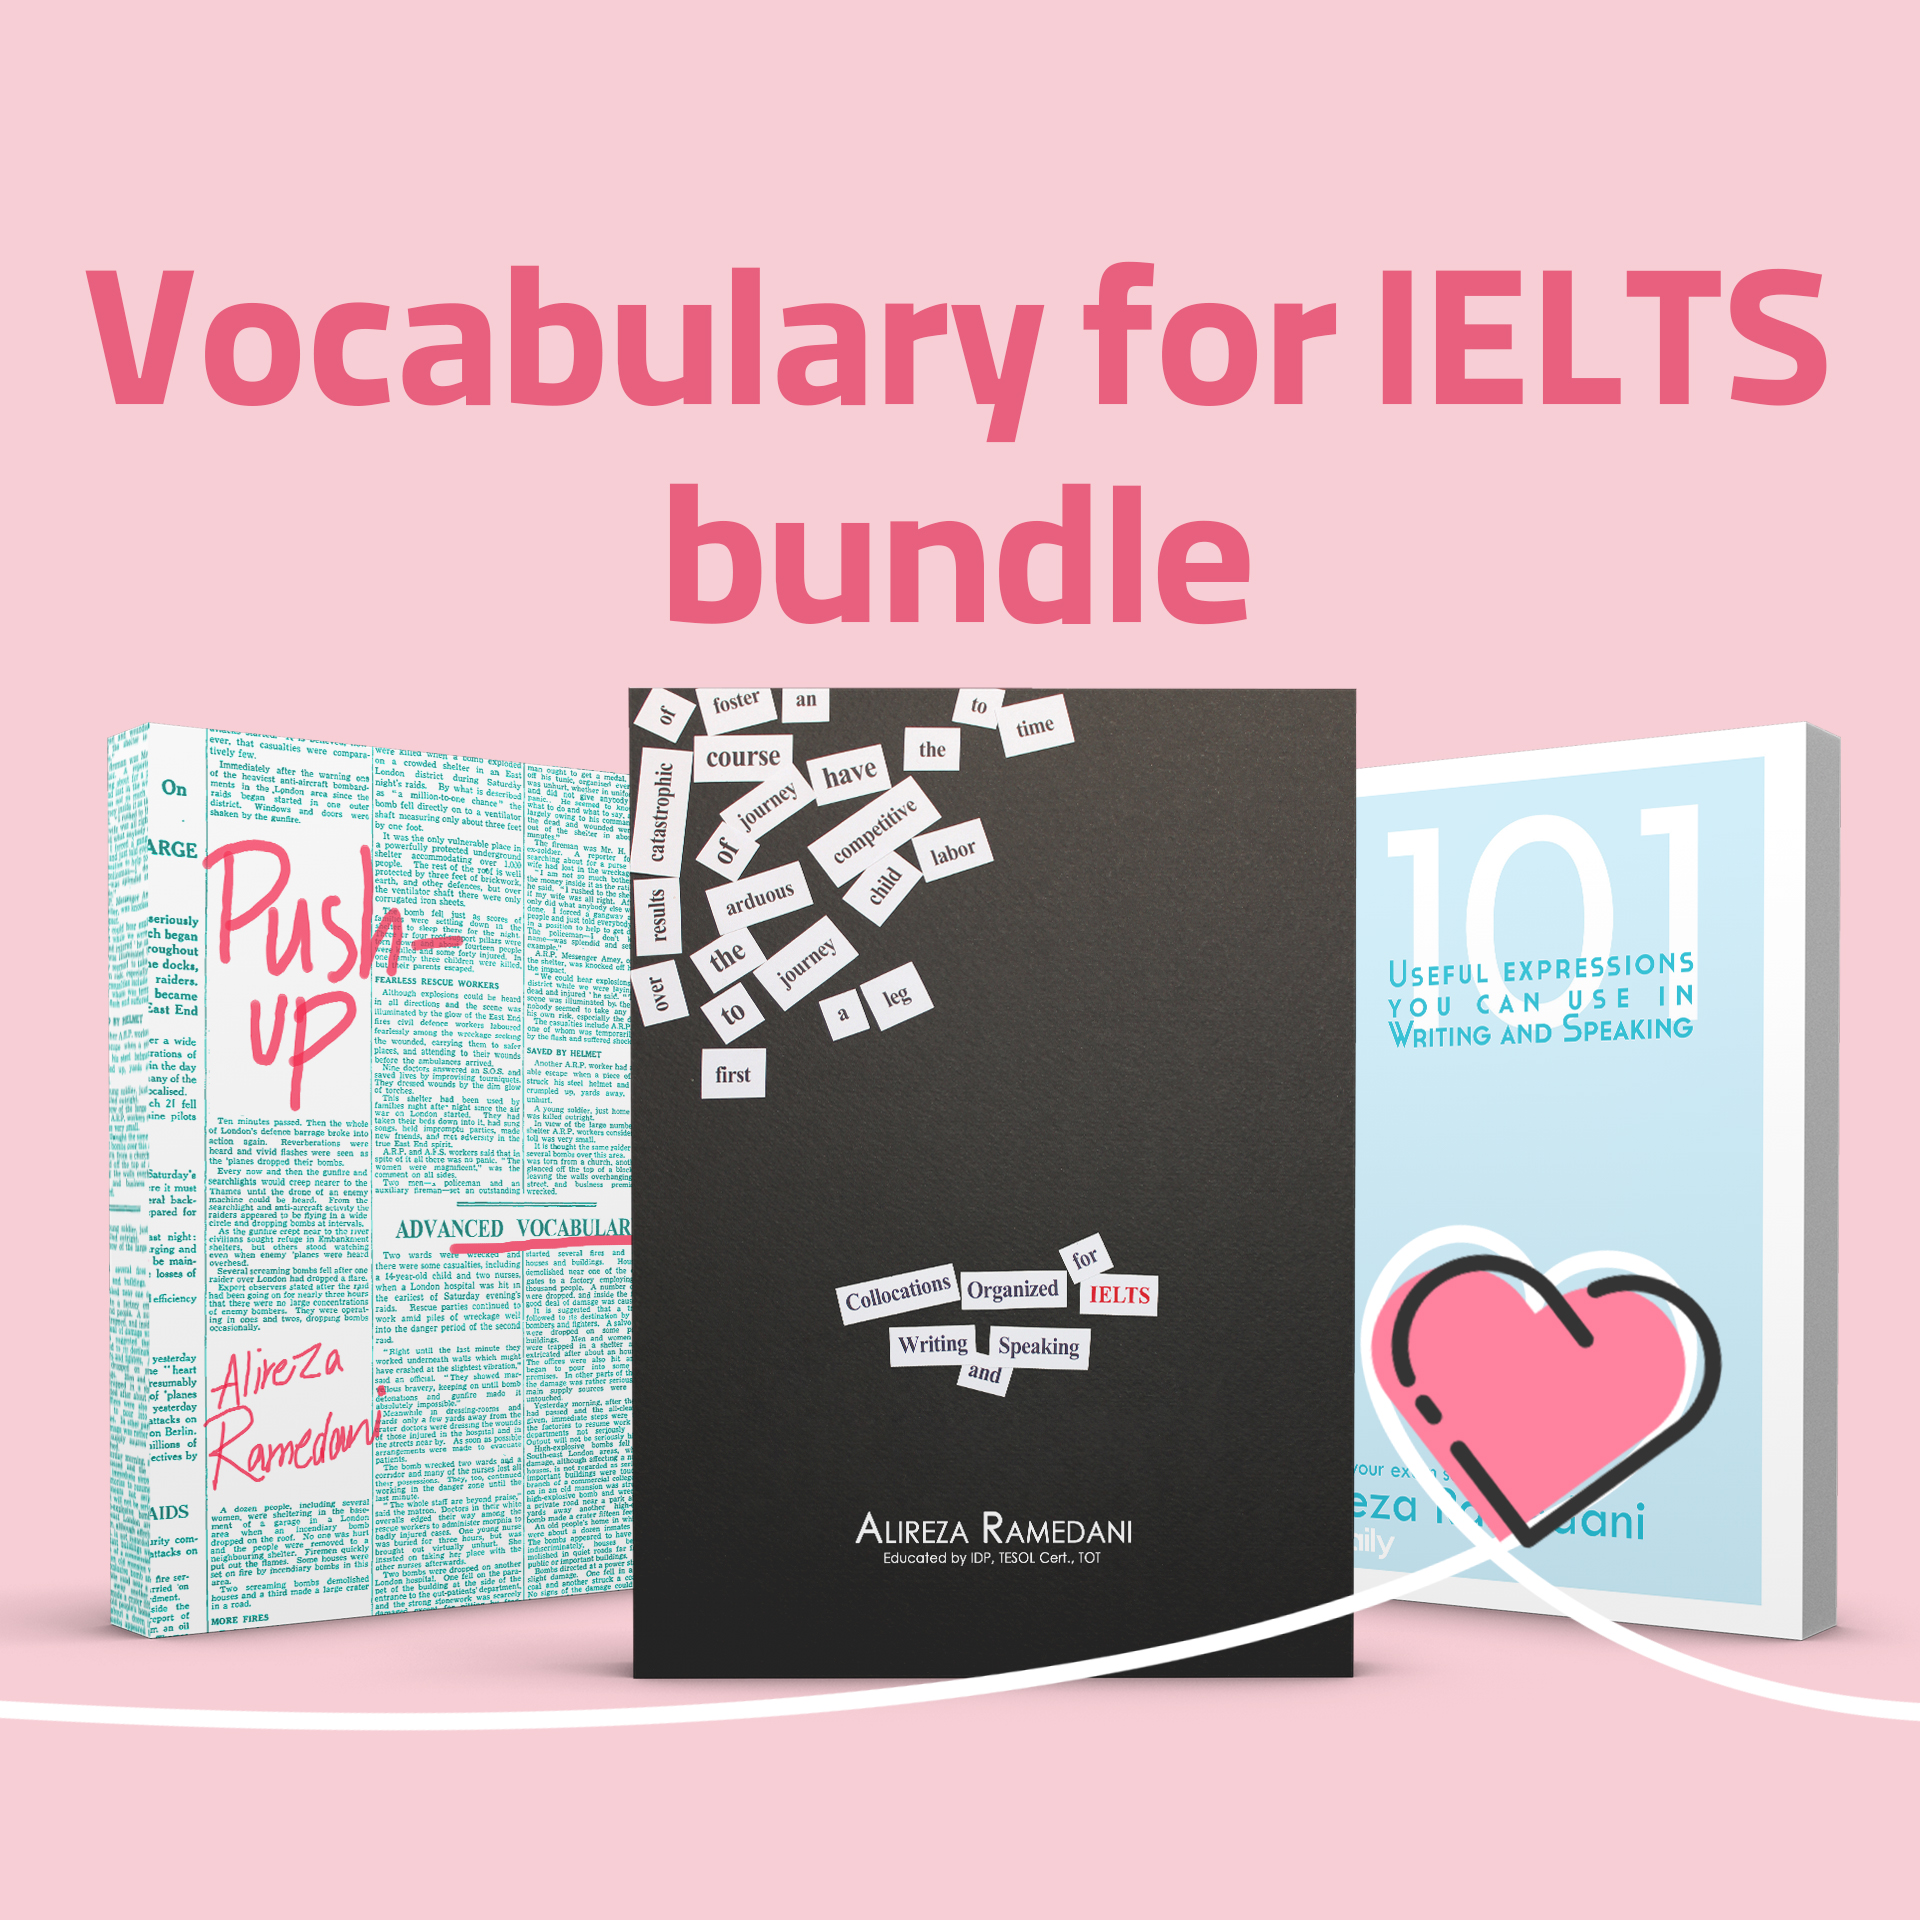 Vocabulary for IELTS bundle